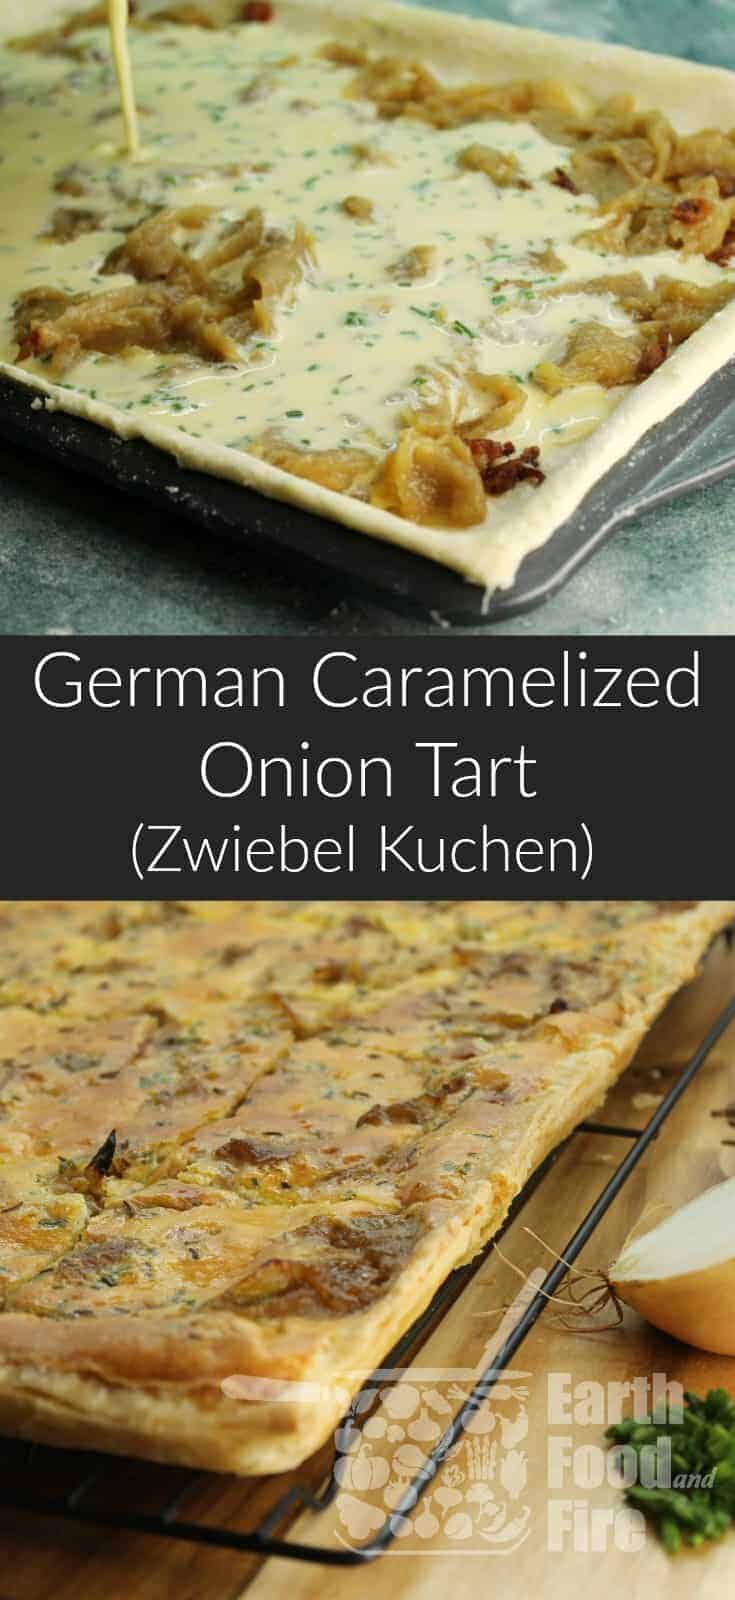 German Caramelized Onion Tart - Zwiebel Kuchen - Earth, Food, and Fire